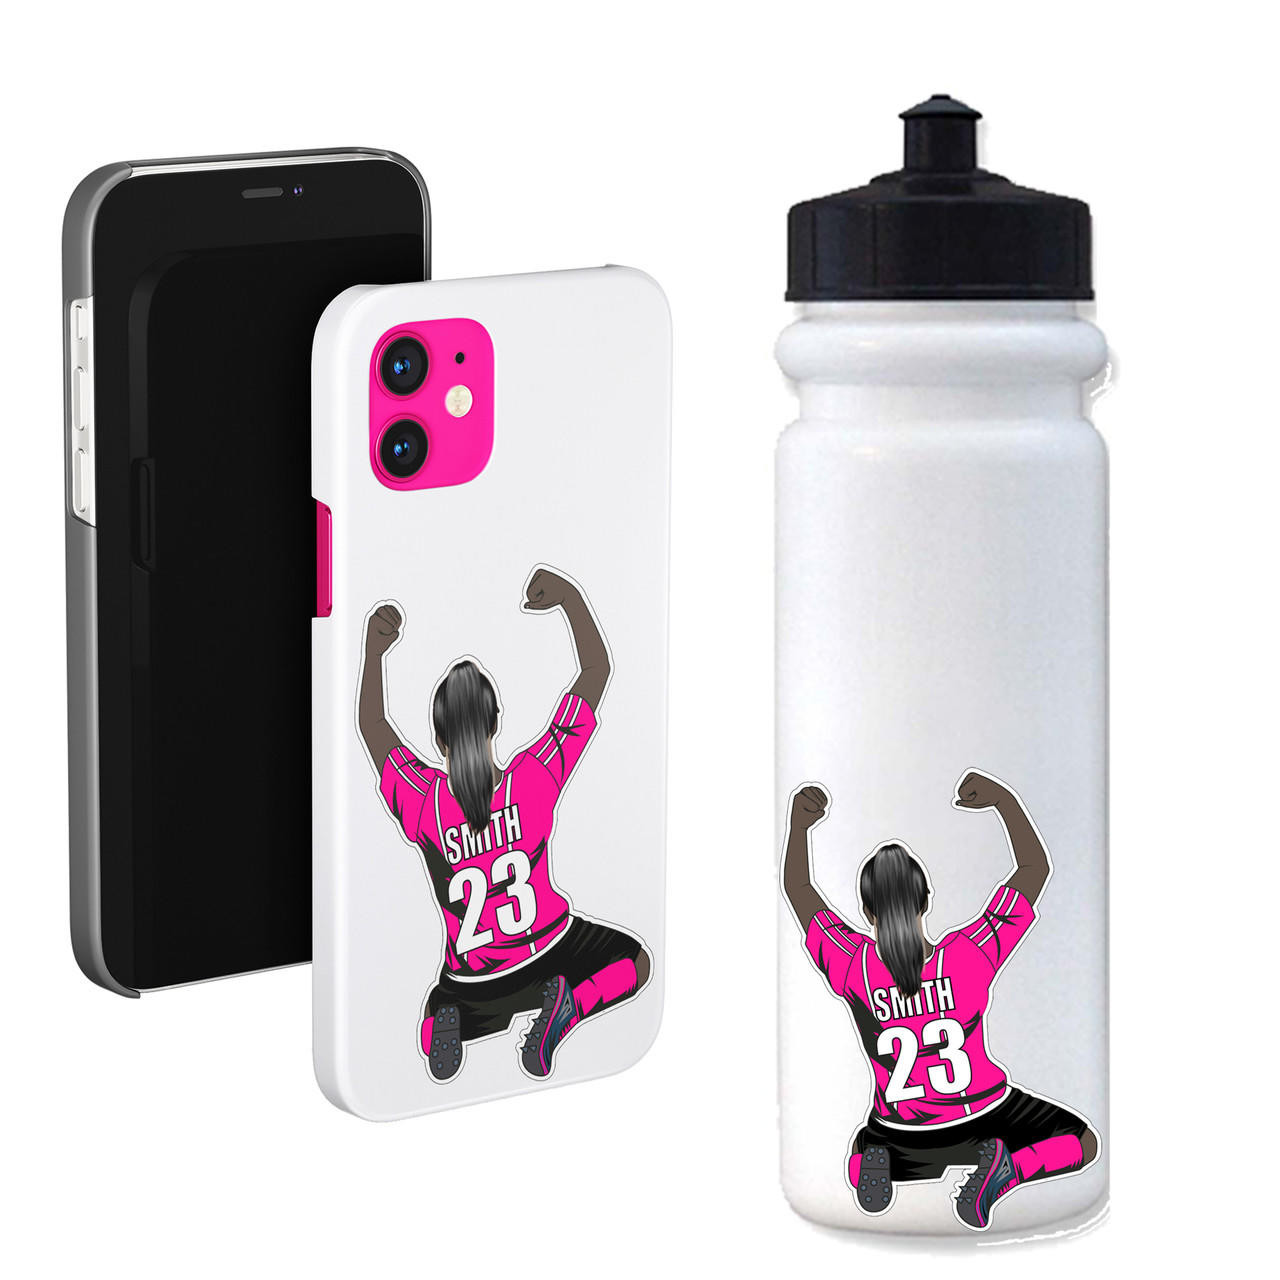 Stinky Lockers Personalized Soccer Water Bottle Sticker-3 Pack